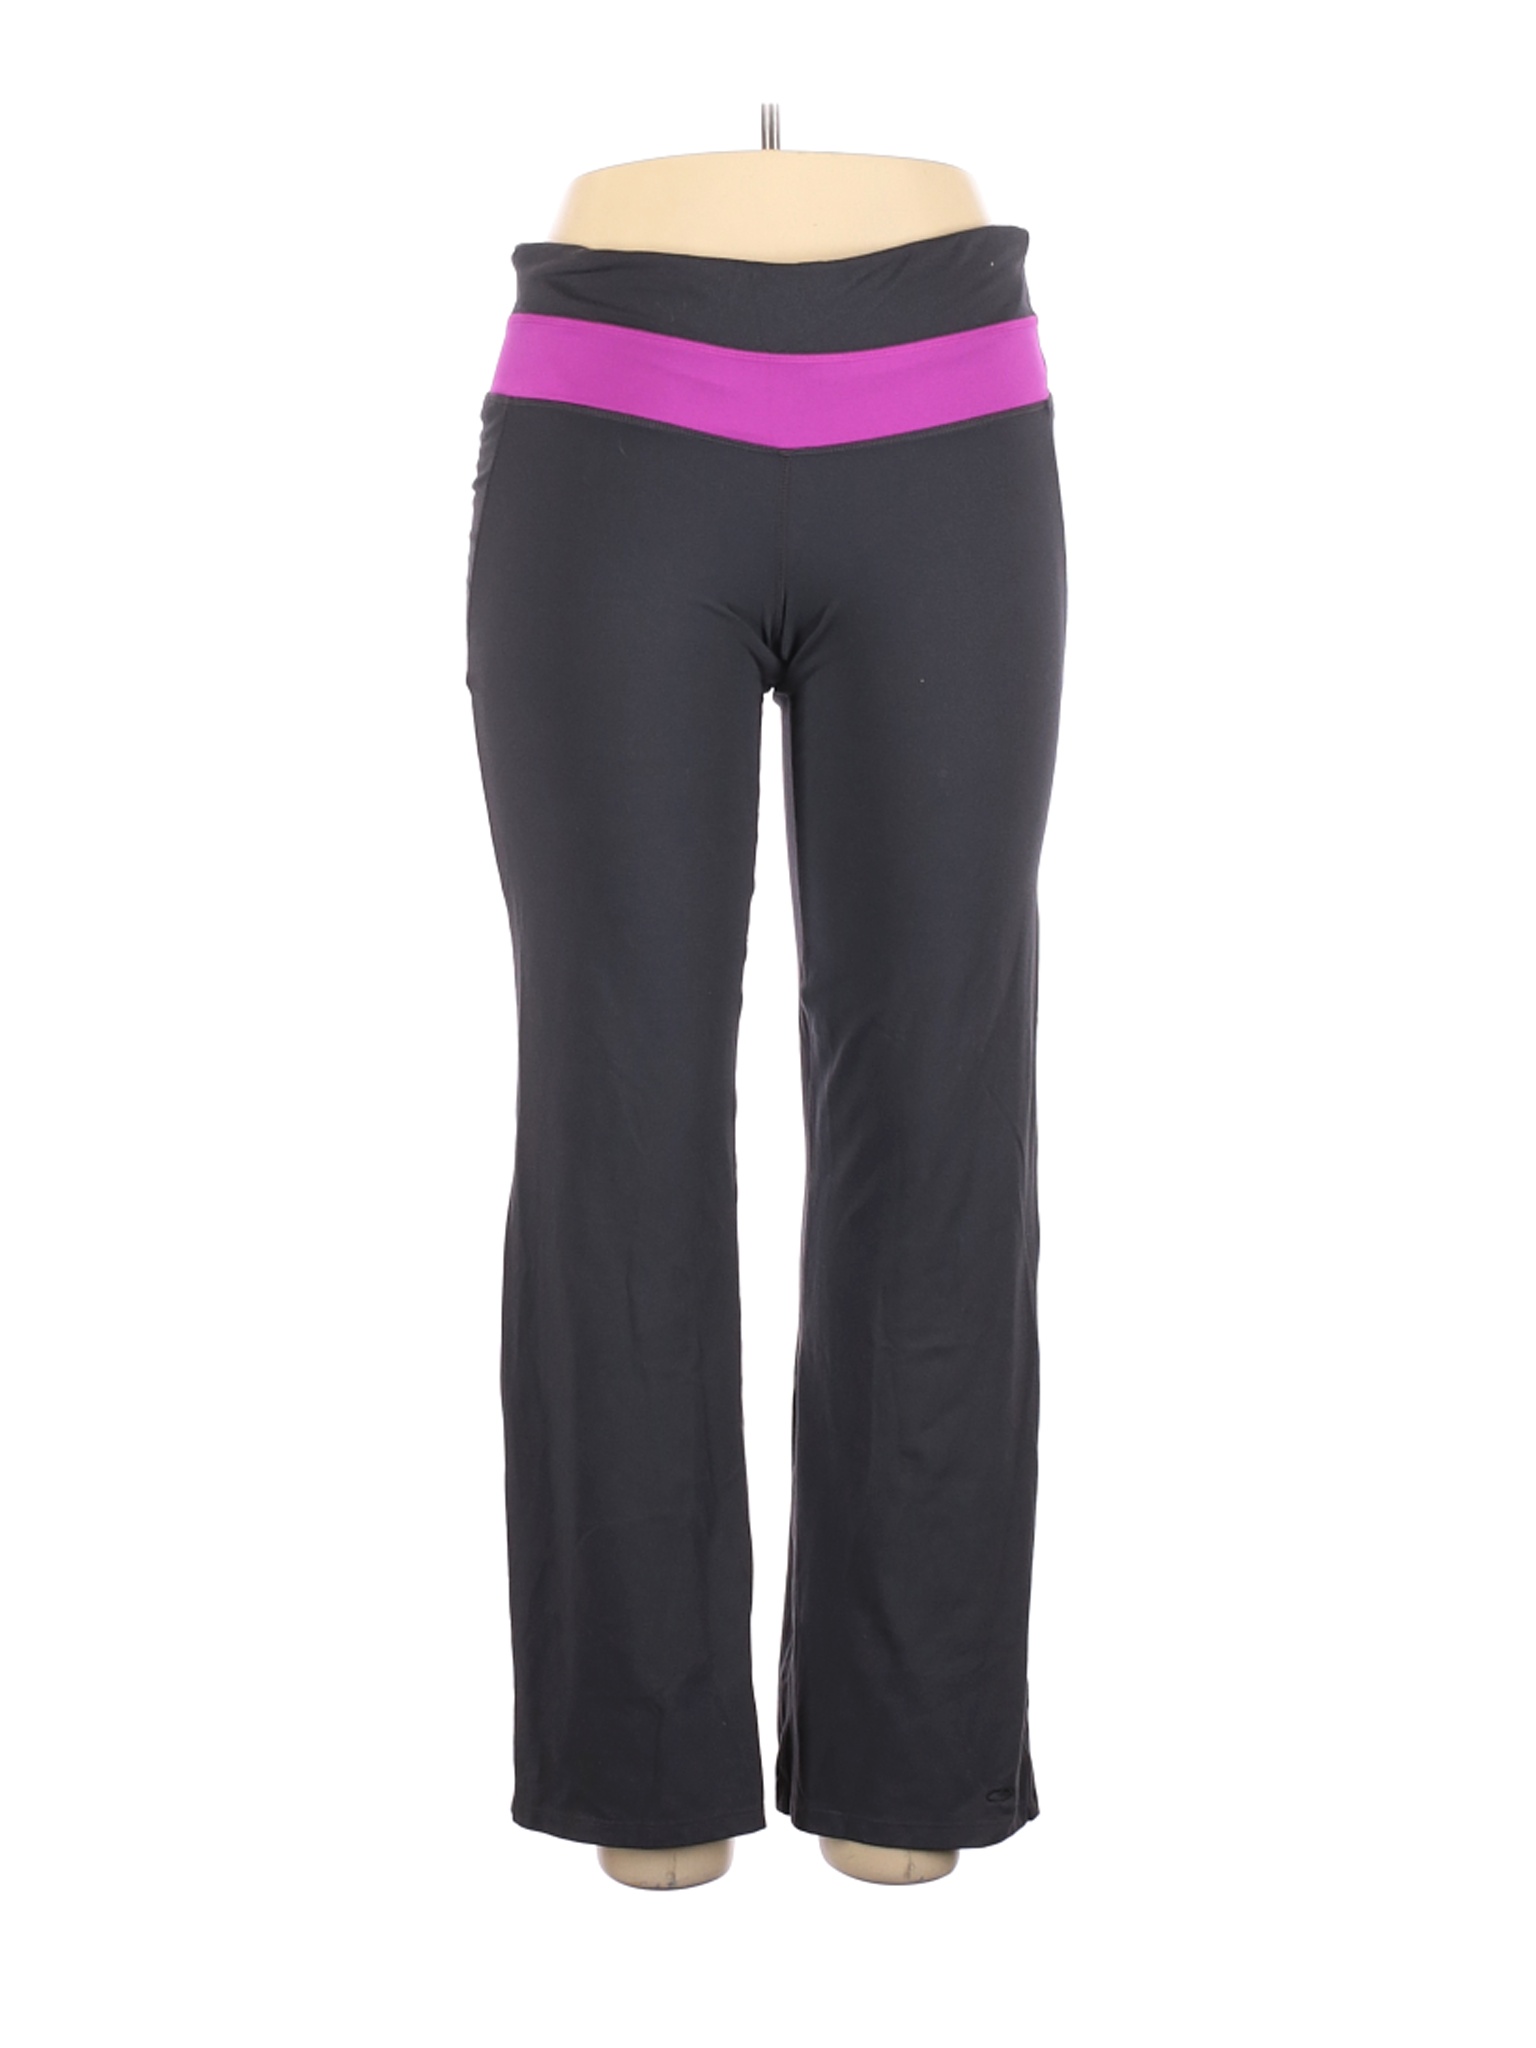 C9 Champion Women's Curvy Fit Yoga Pant, Ebony - Short Length, L